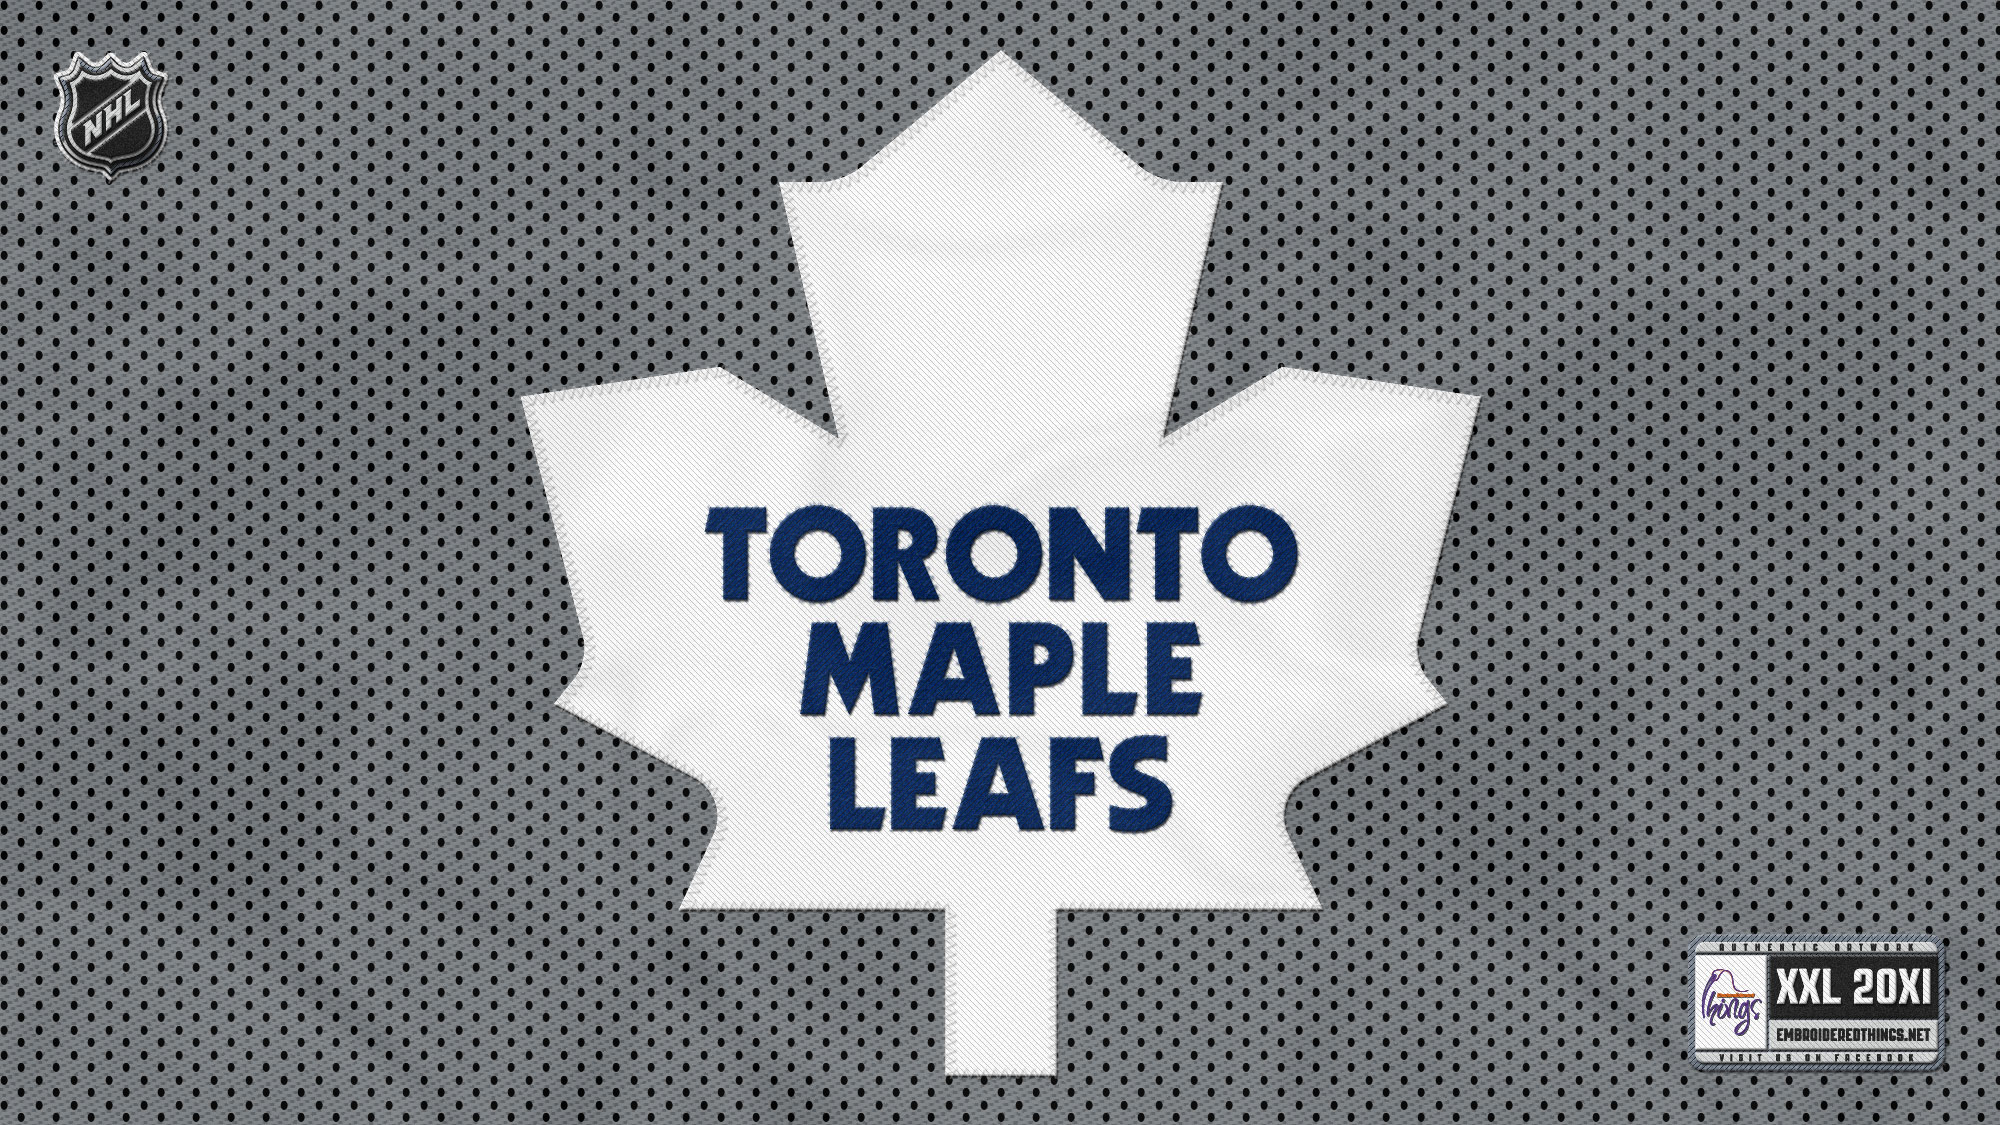 Wallpaper Feedio Toronto Maple Leafs Back Top Hockey